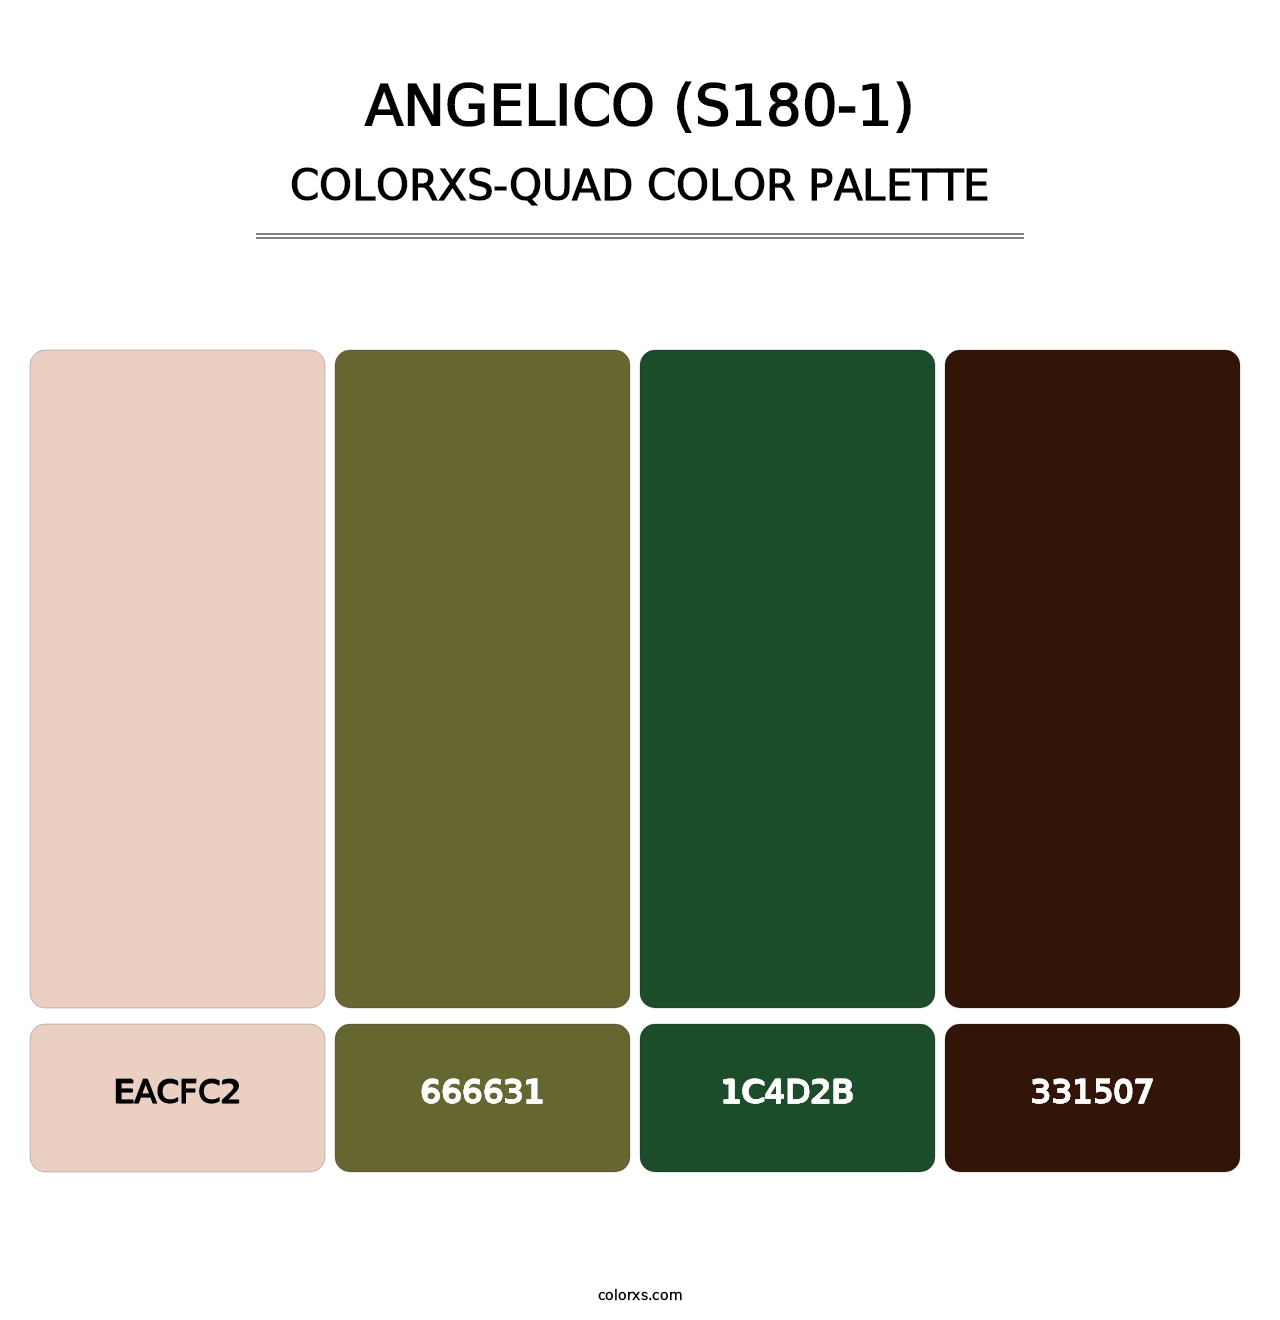 Angelico (S180-1) - Colorxs Quad Palette